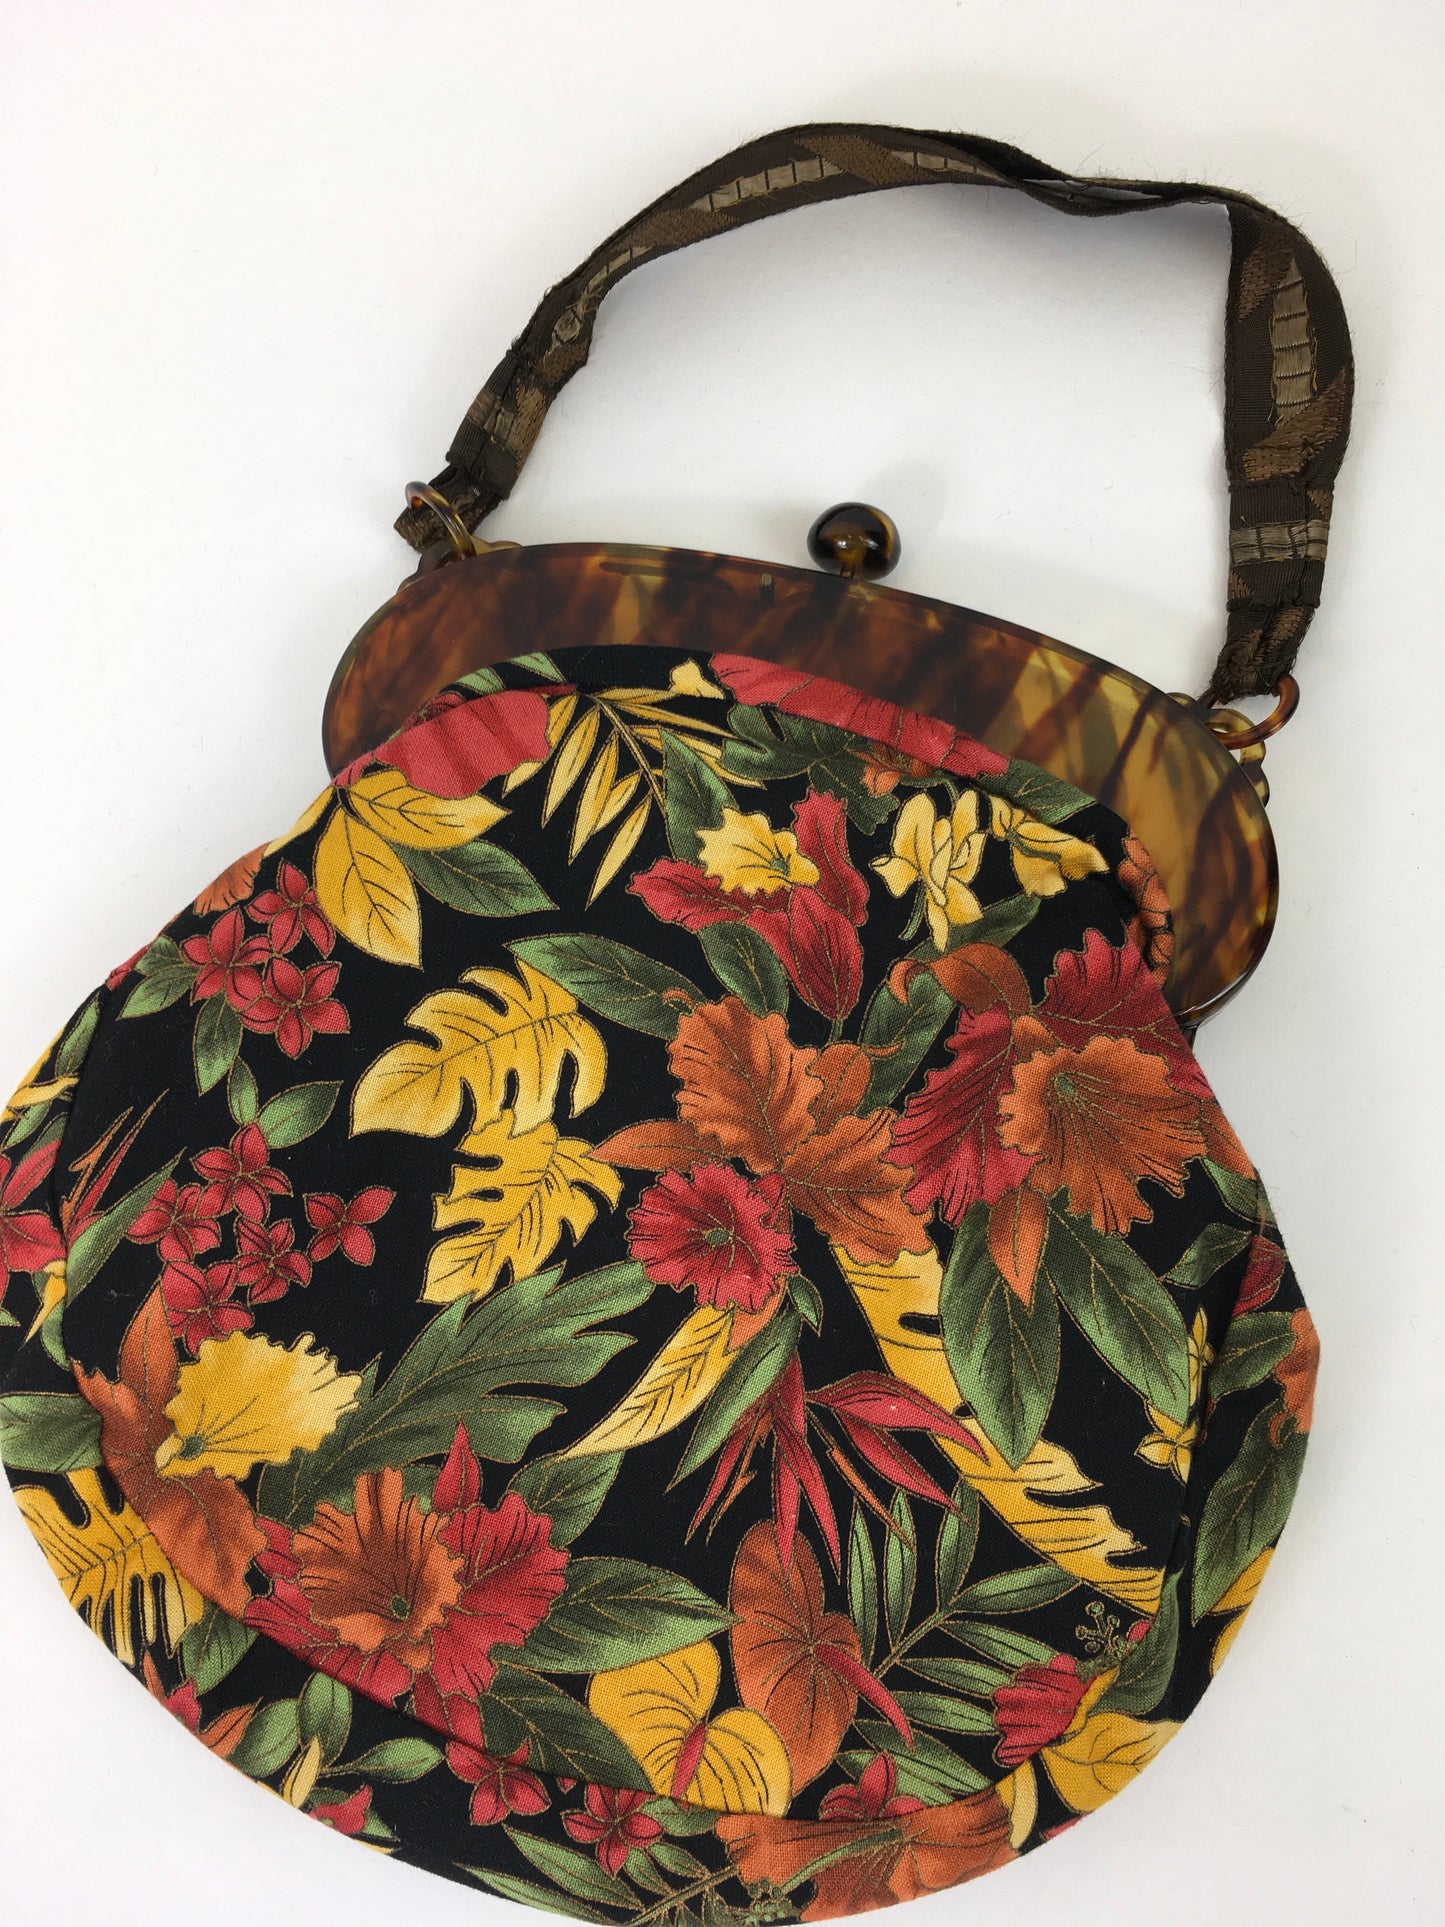 Original late 1920’s Handbag - Faux Tortoiseshell Clasp and Autumnal Brights Fabric